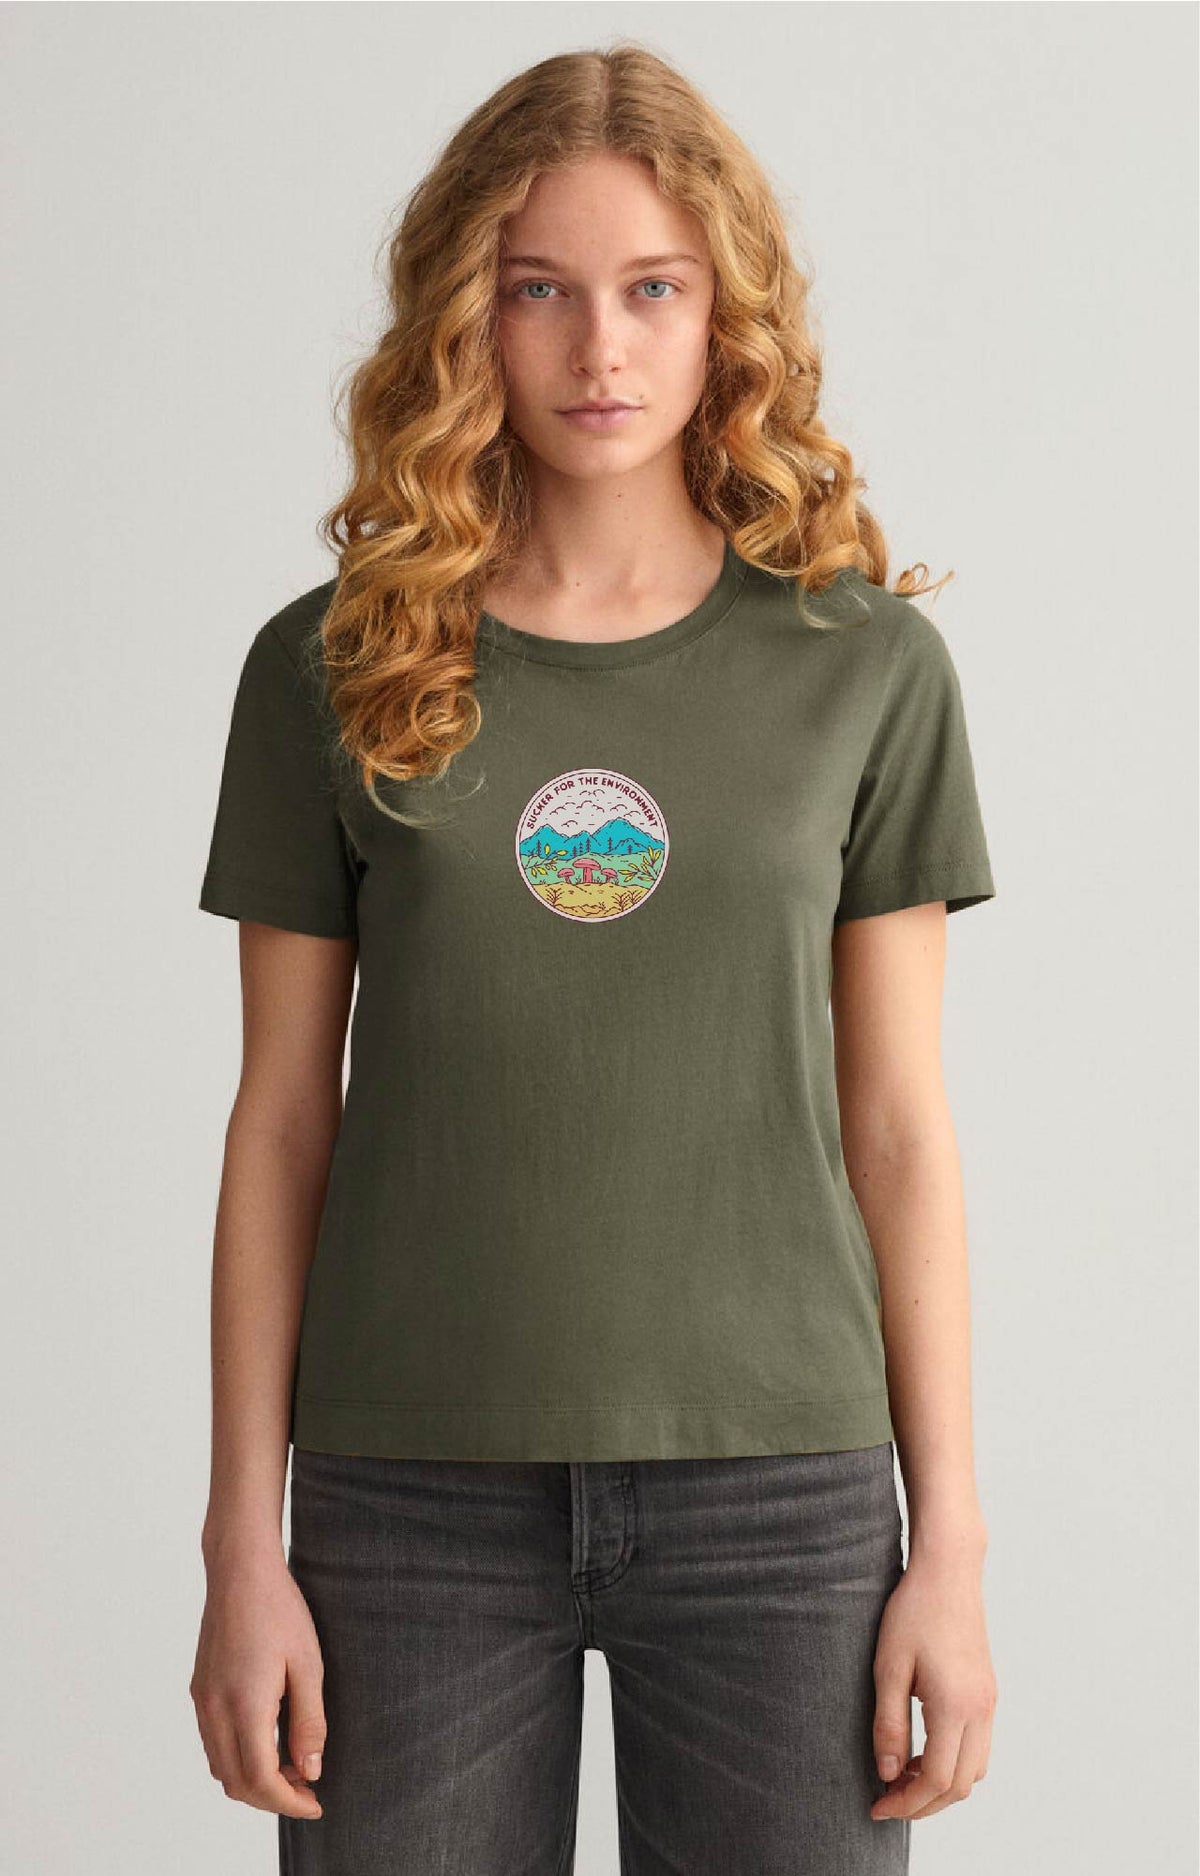 Sucker for the Environment - Unisex Organic Cotton T-Shirt  M - XXXL